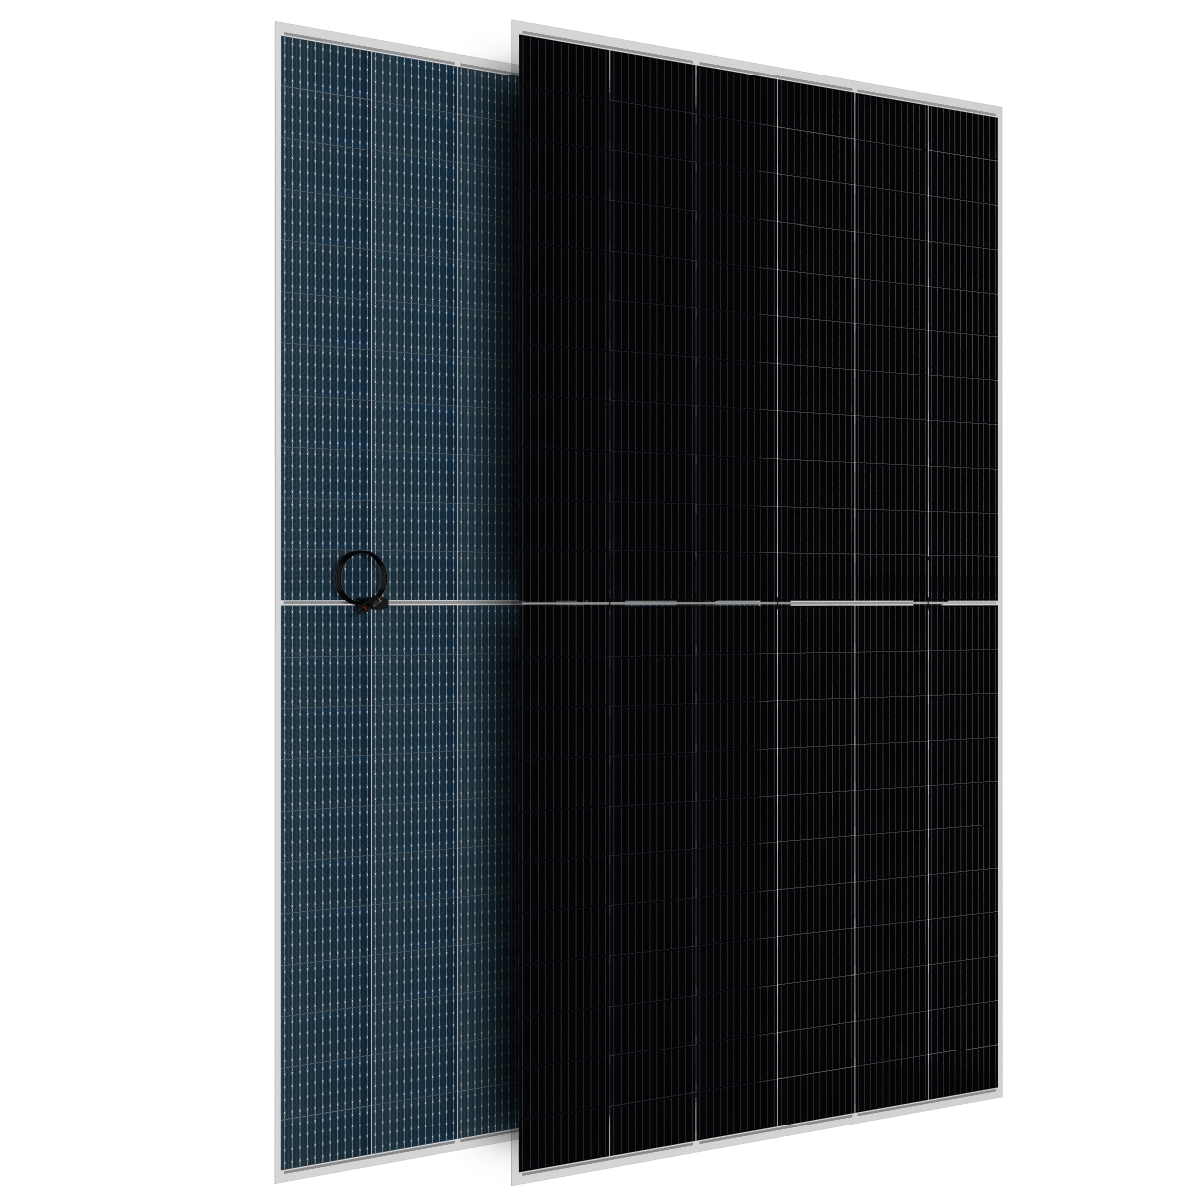 TommaTech 665Wp 132PMB M12 HC-MB G2G Solar Panel